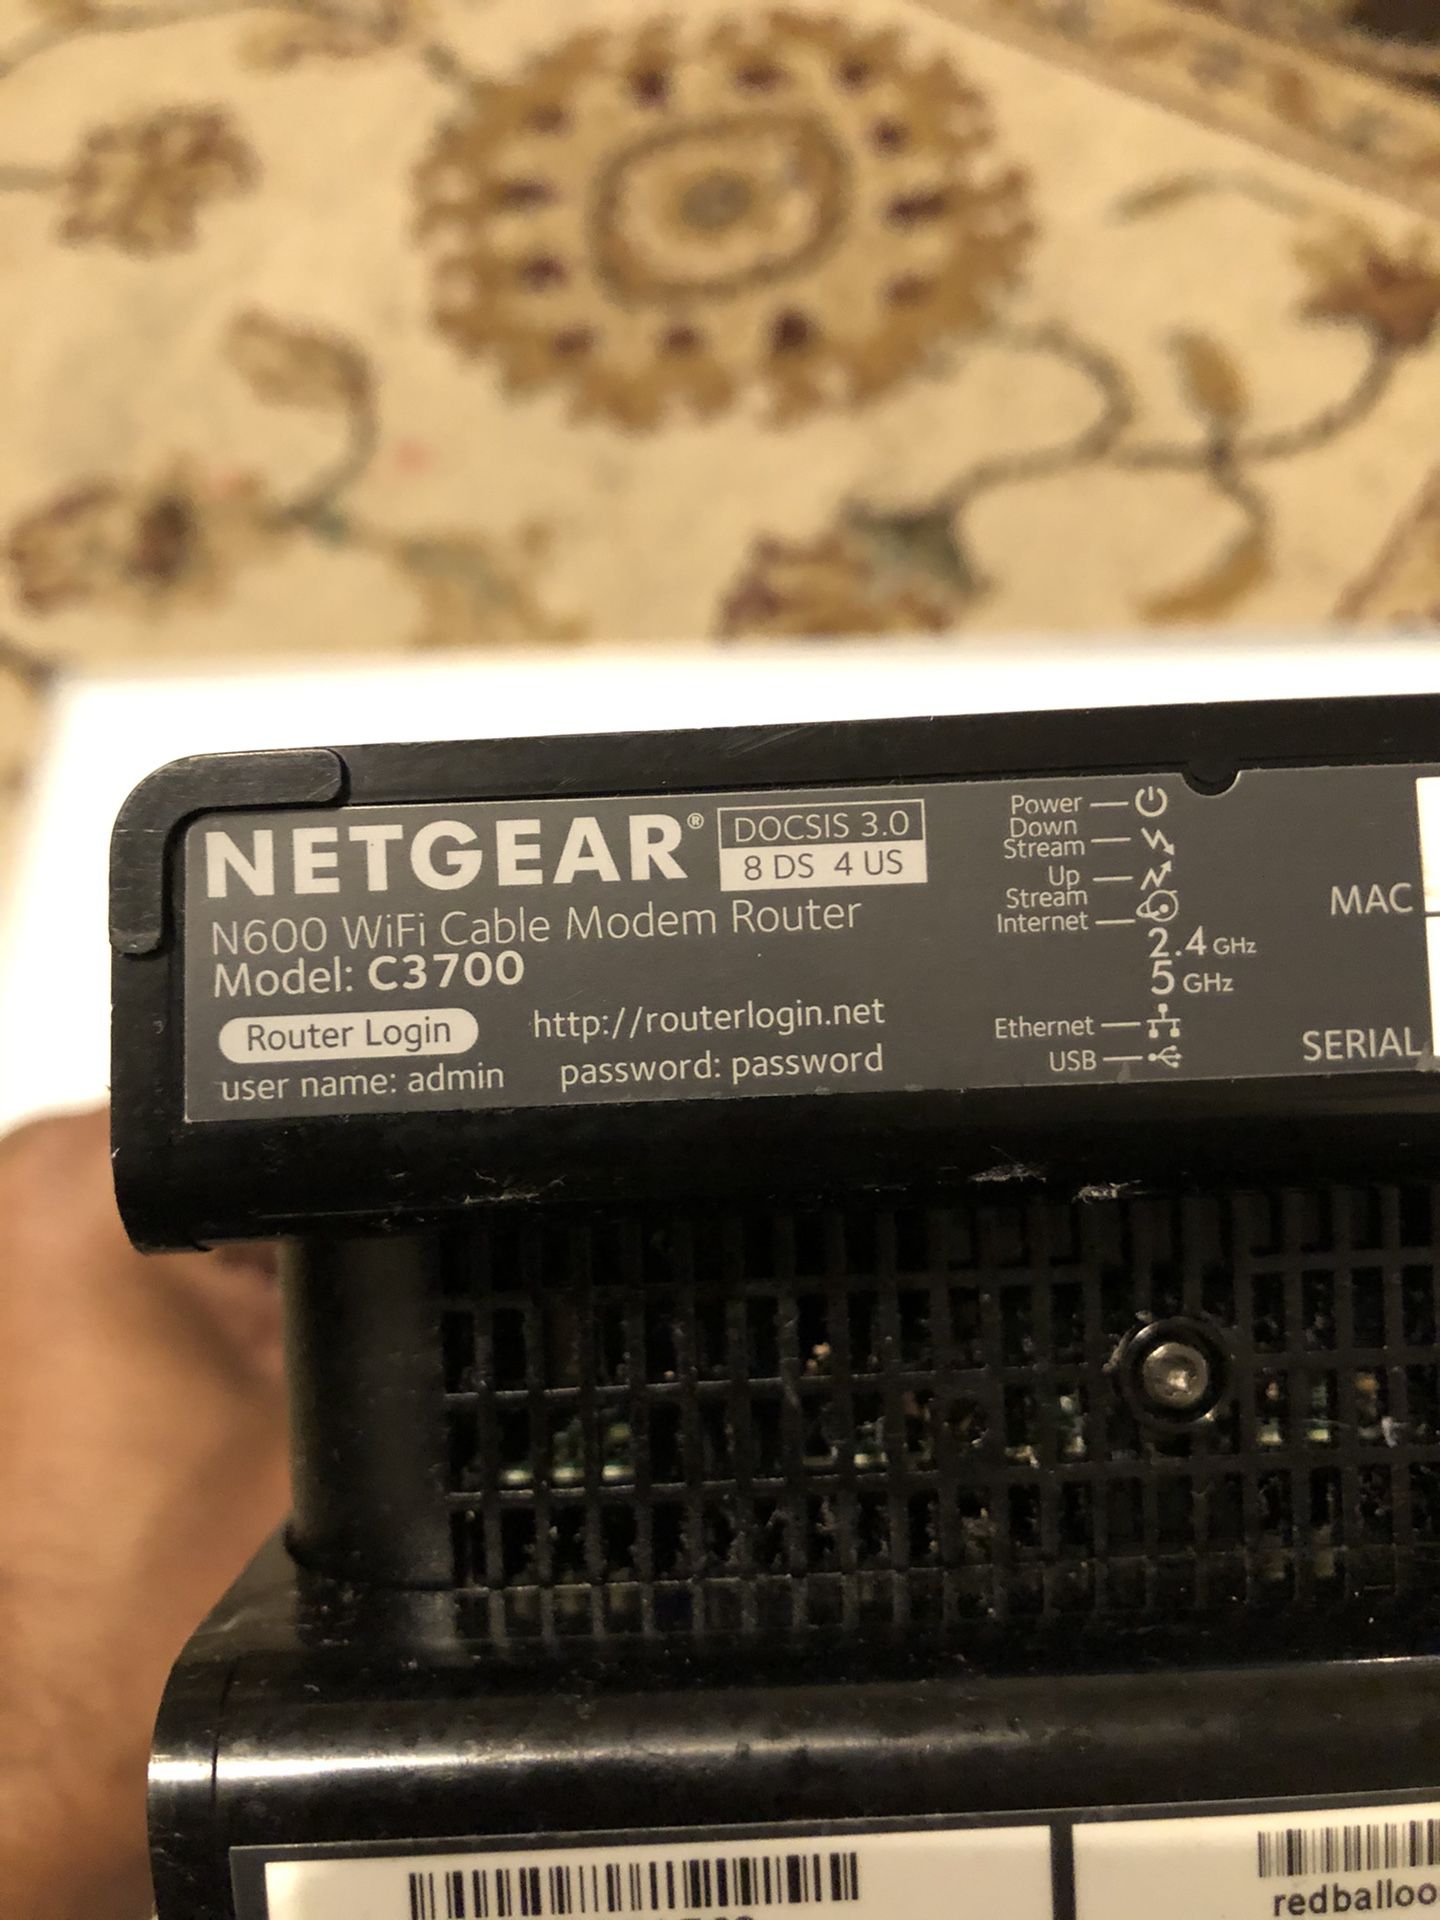 NETGEAR N600 (model:C3700) WiFi Cable Modem